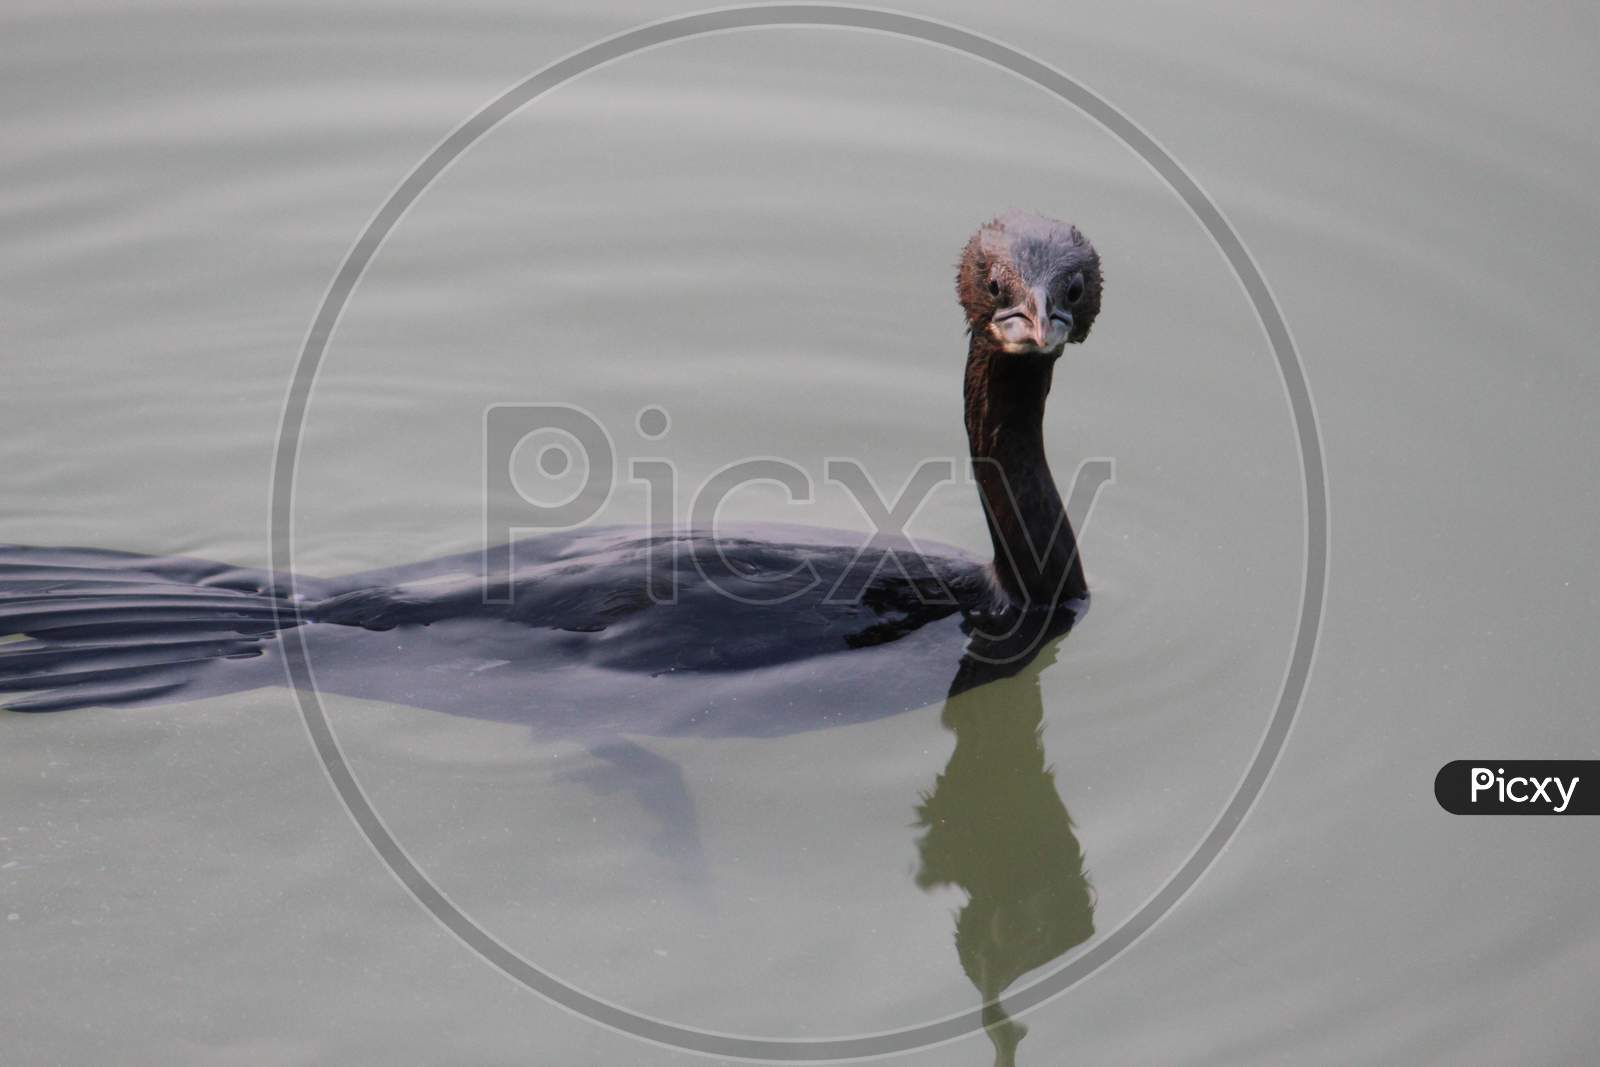 A little black cormorant or Phalacrocorax bird swimming on water under sun.